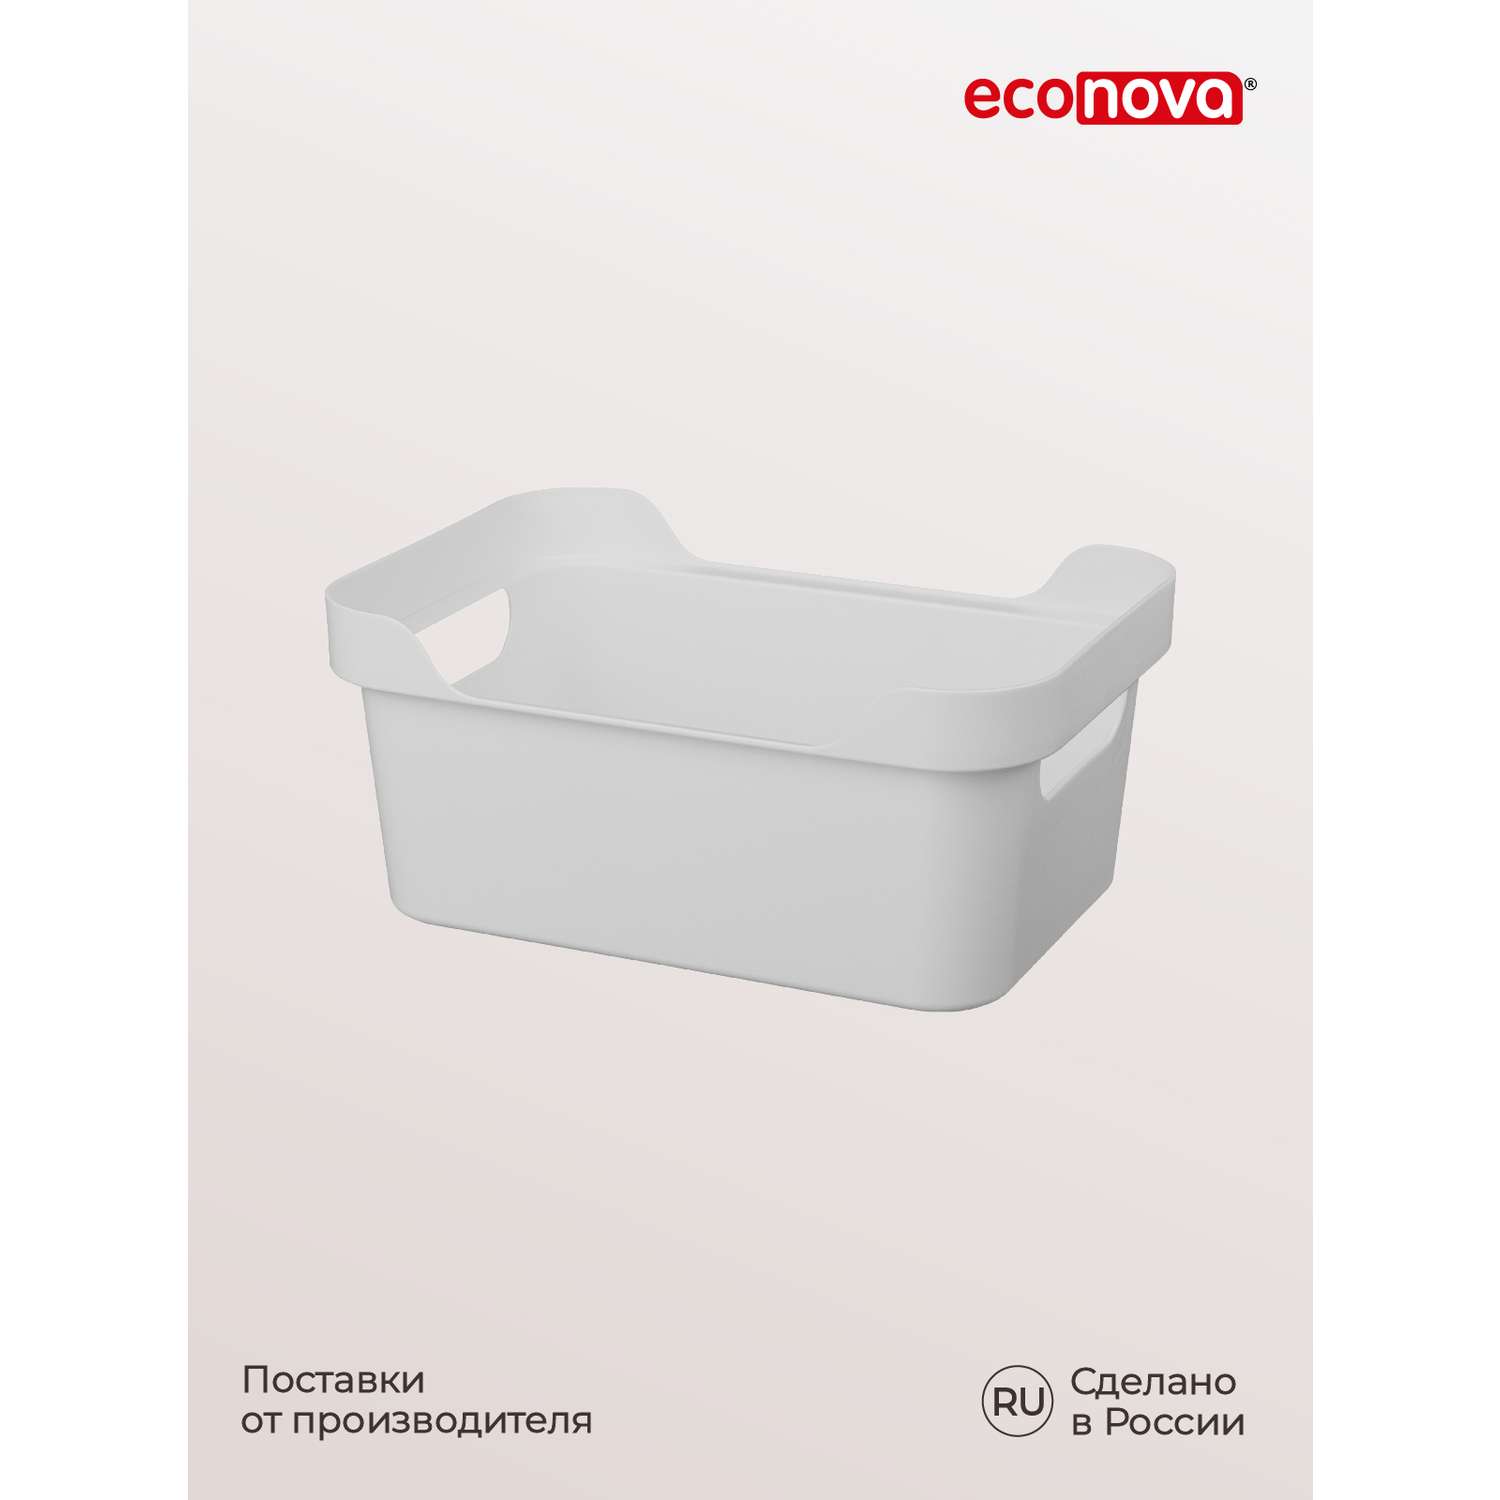 Коробка Econova с крышкой LUXE 4.6л светло-серый - фото 11